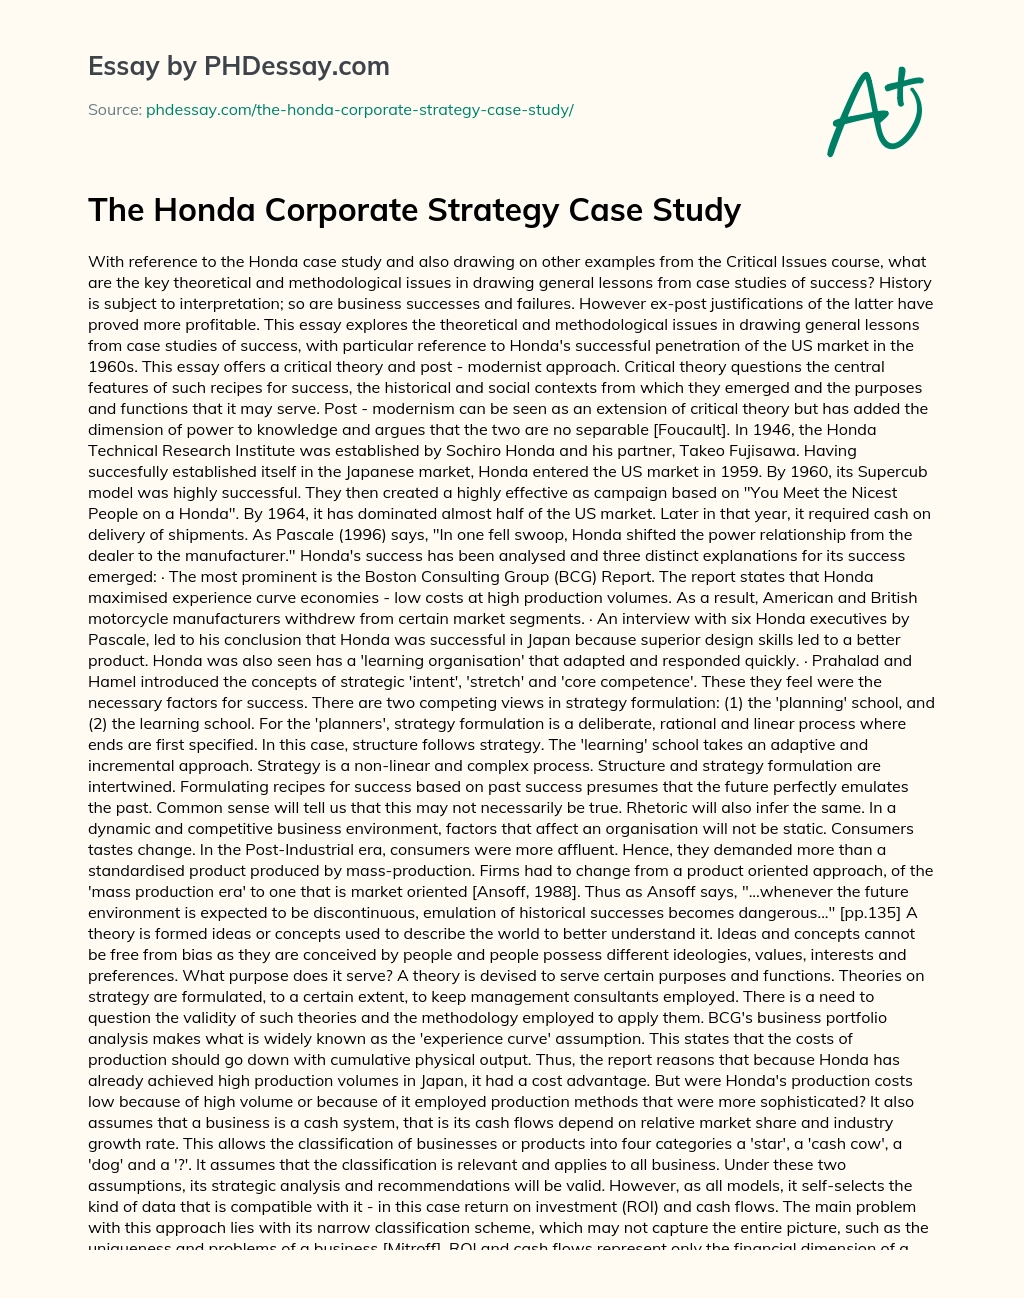 The Honda Corporate Strategy Case Study essay